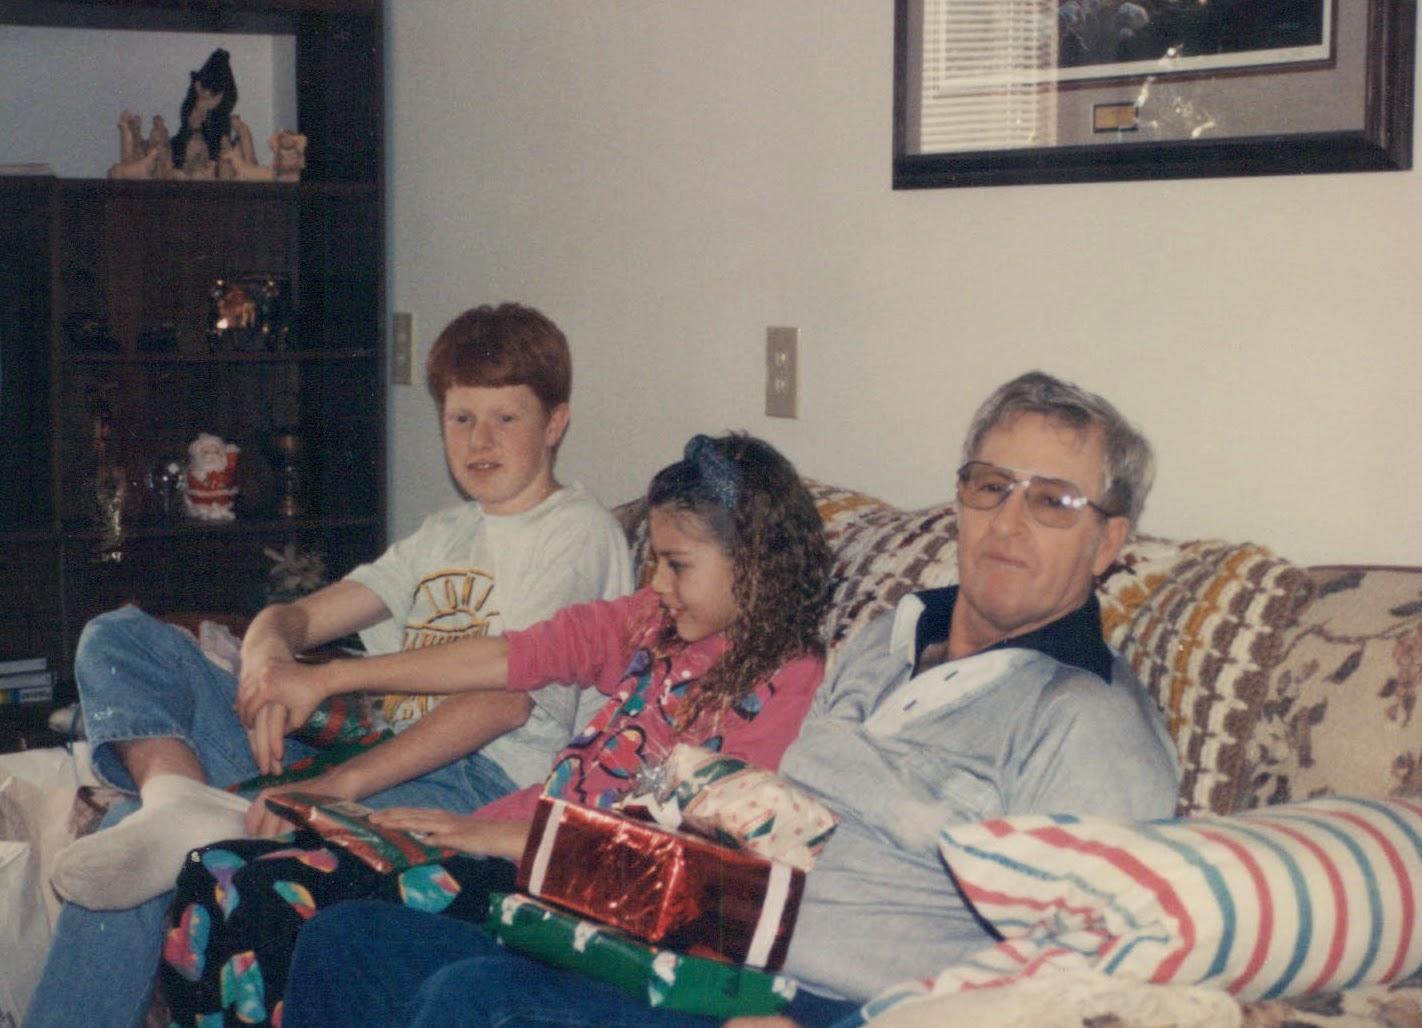 James, Pam, and Grandpa